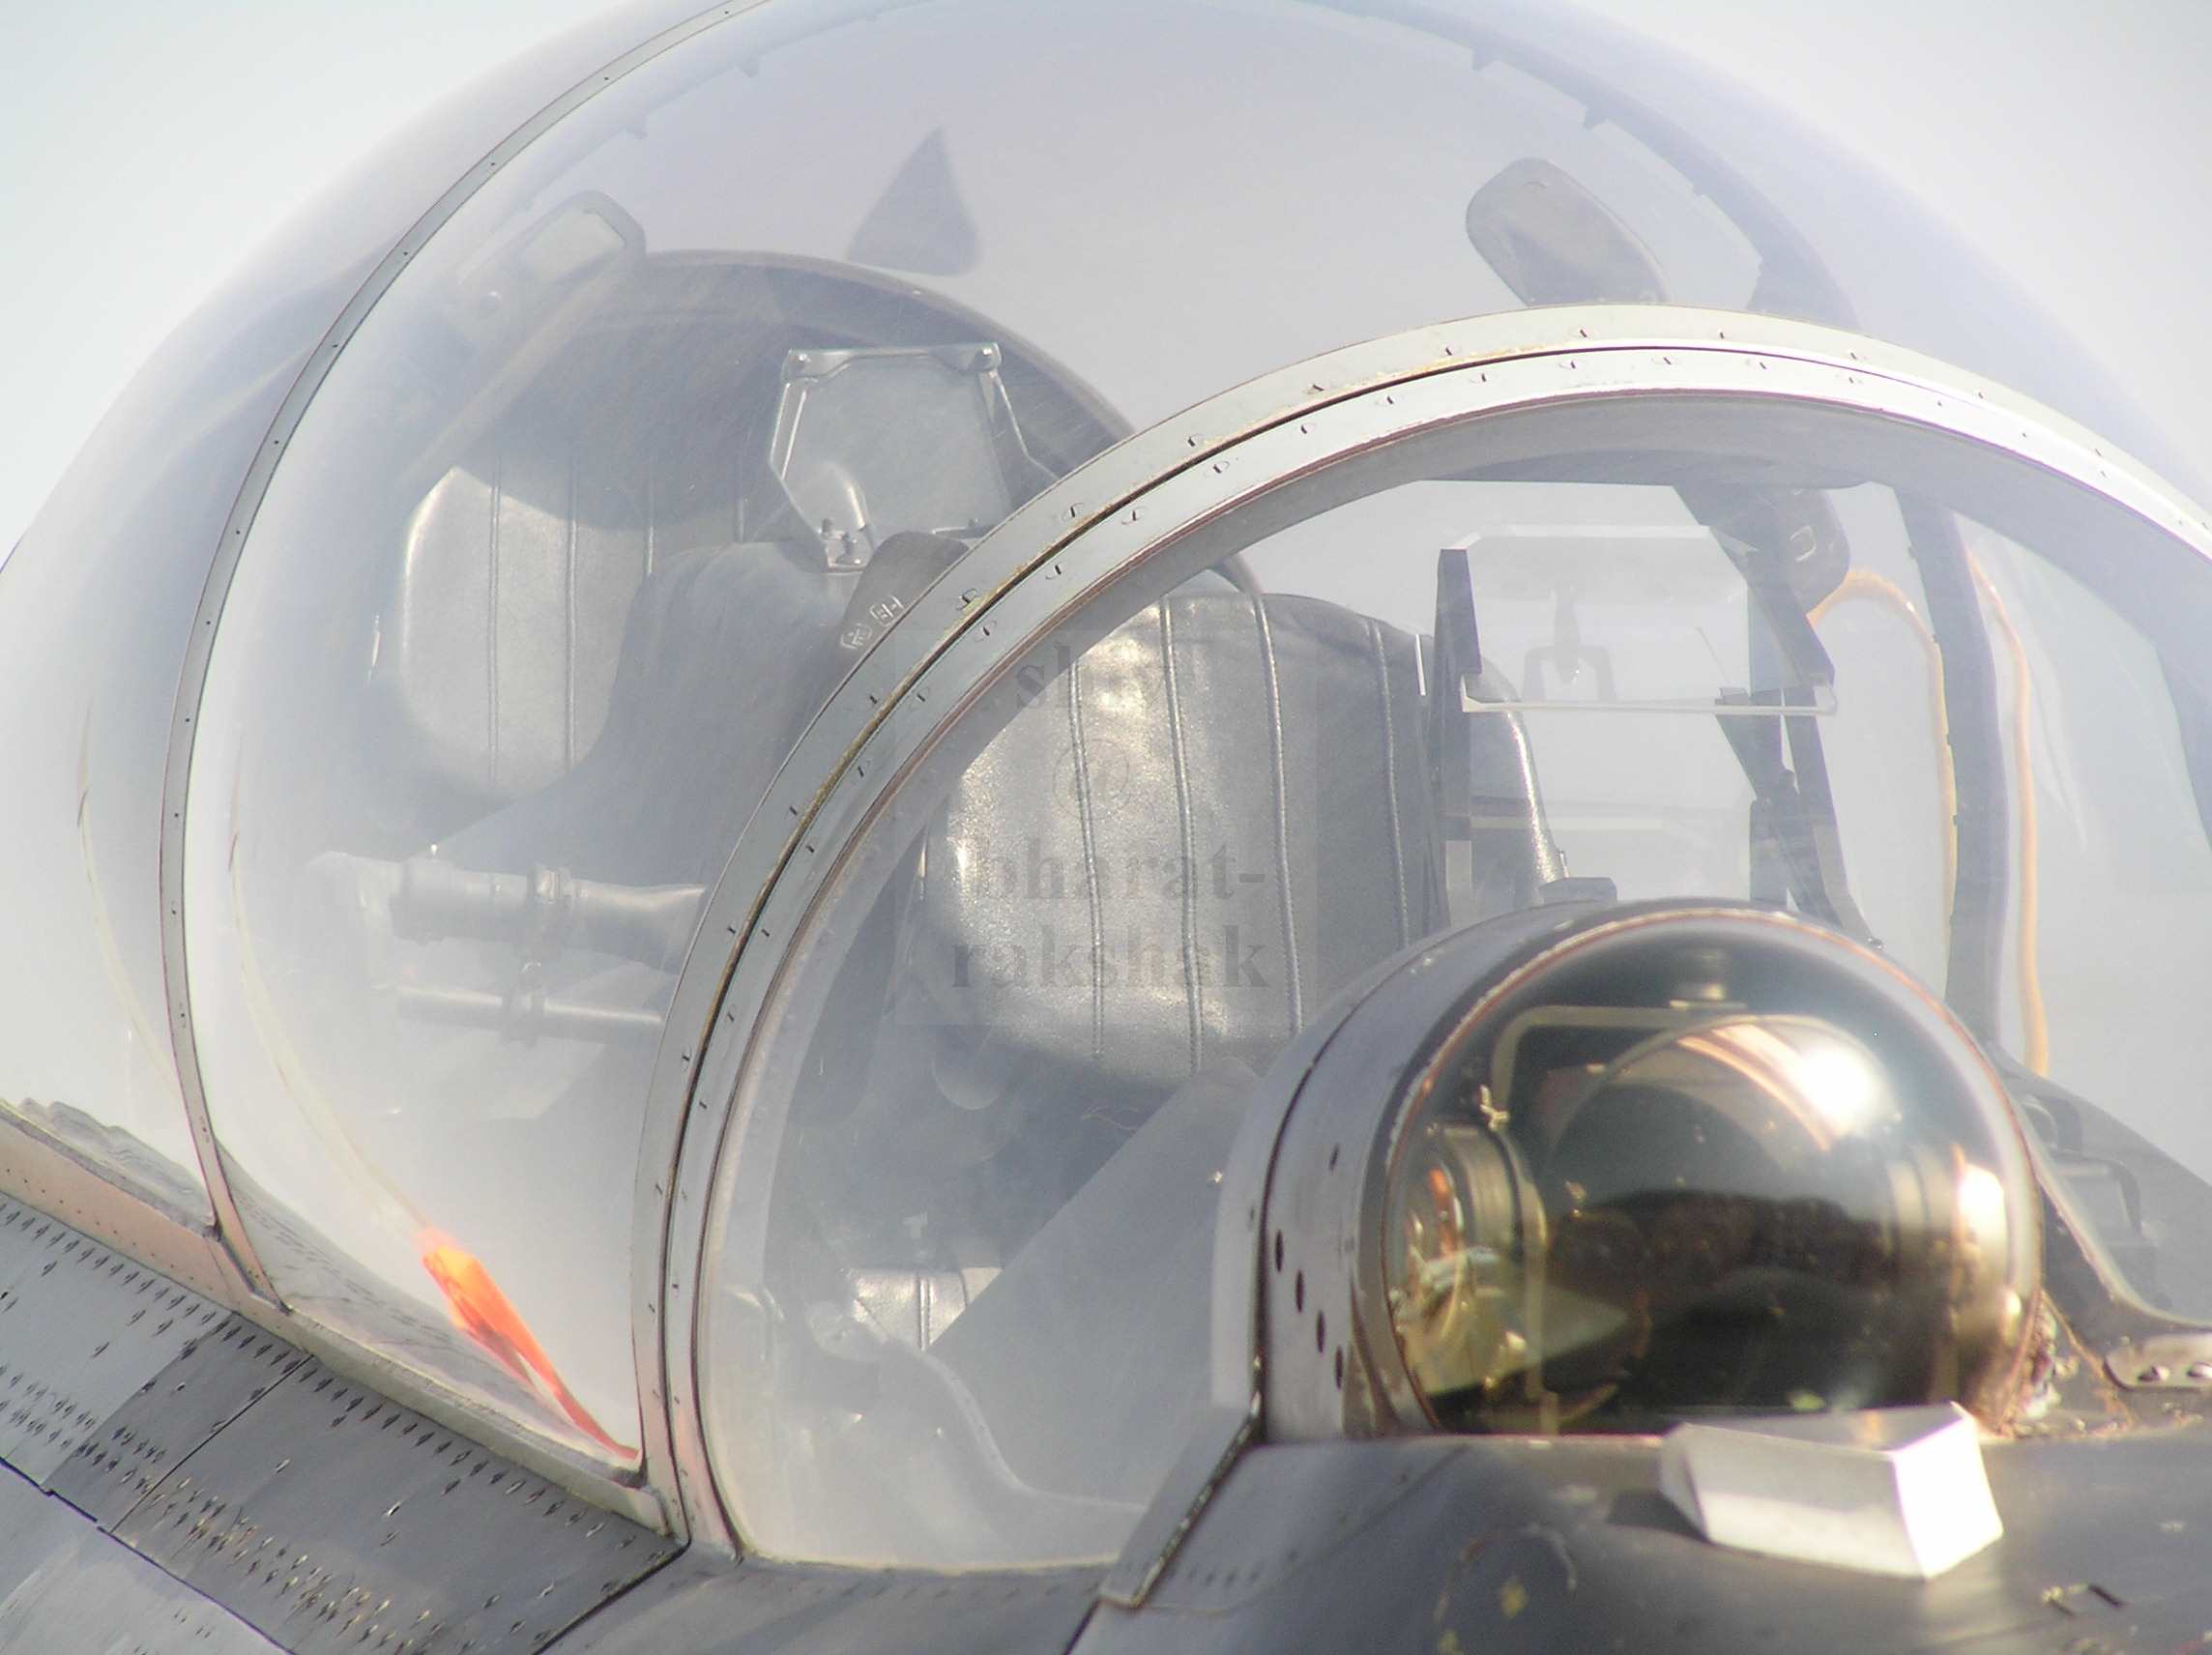 mki cockpit close up